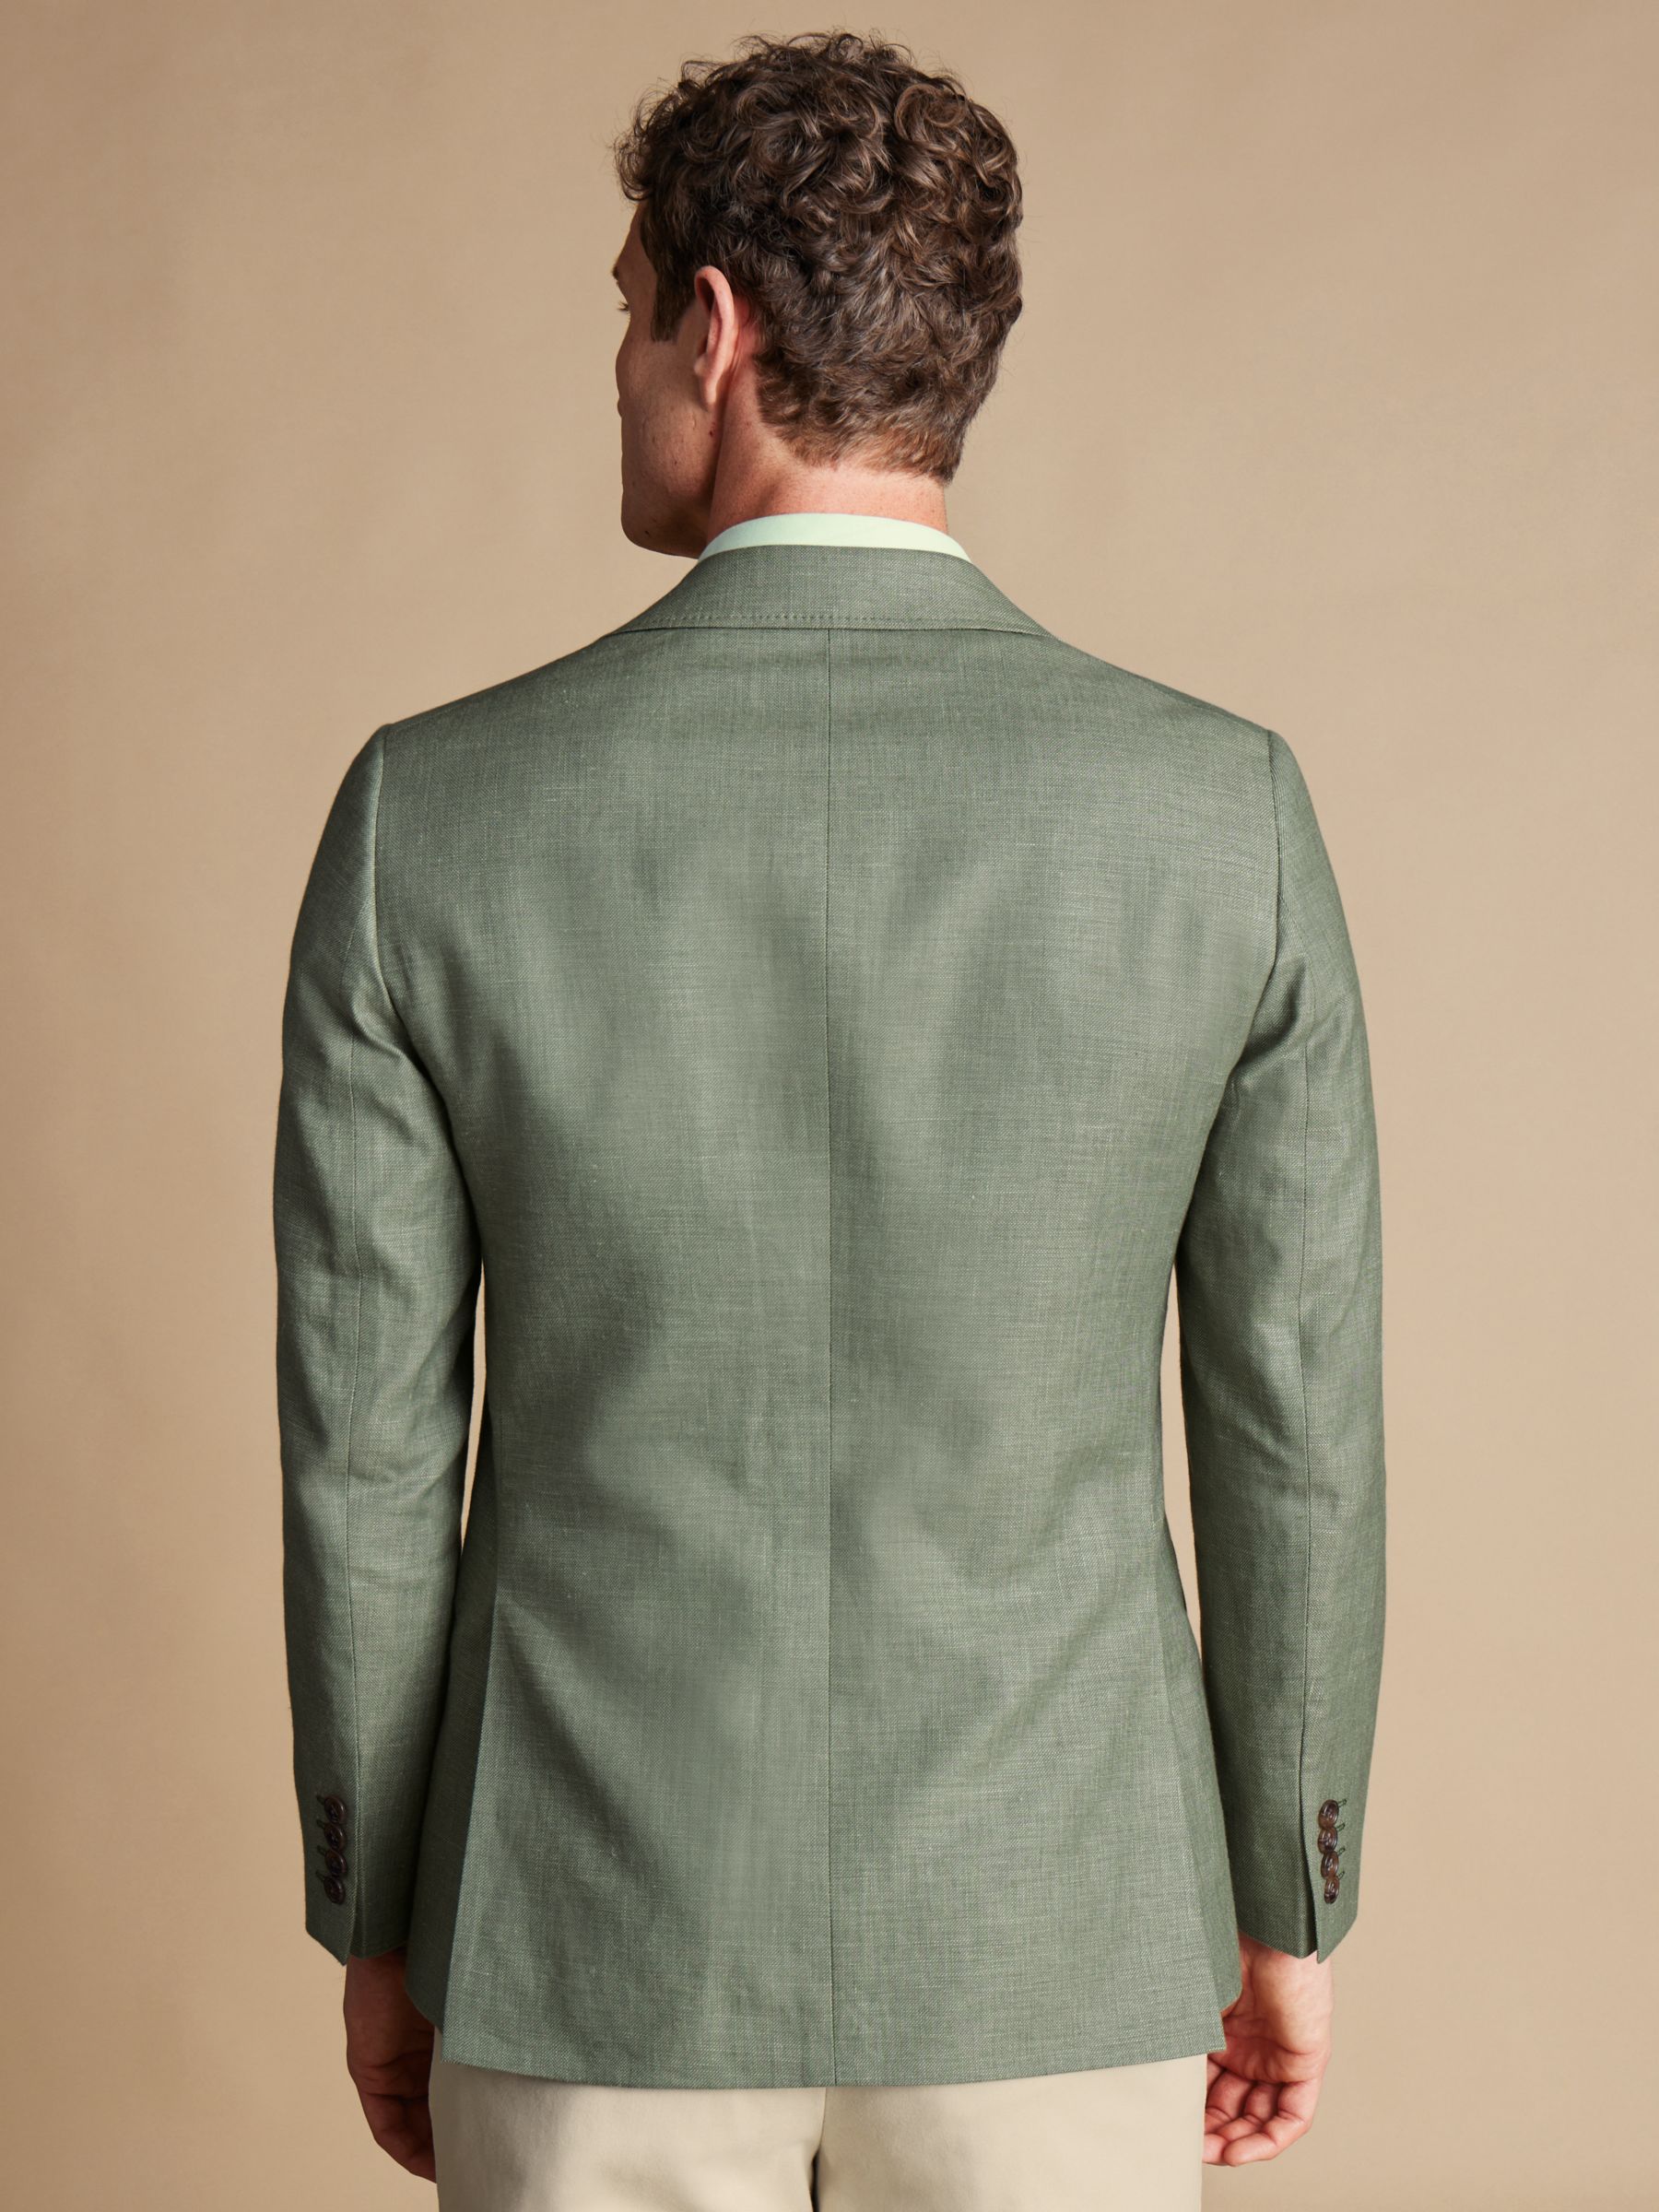 Charles Tyrwhitt Linen and Cotton Blend Slim Fit Blazer, Sage Green, 36R